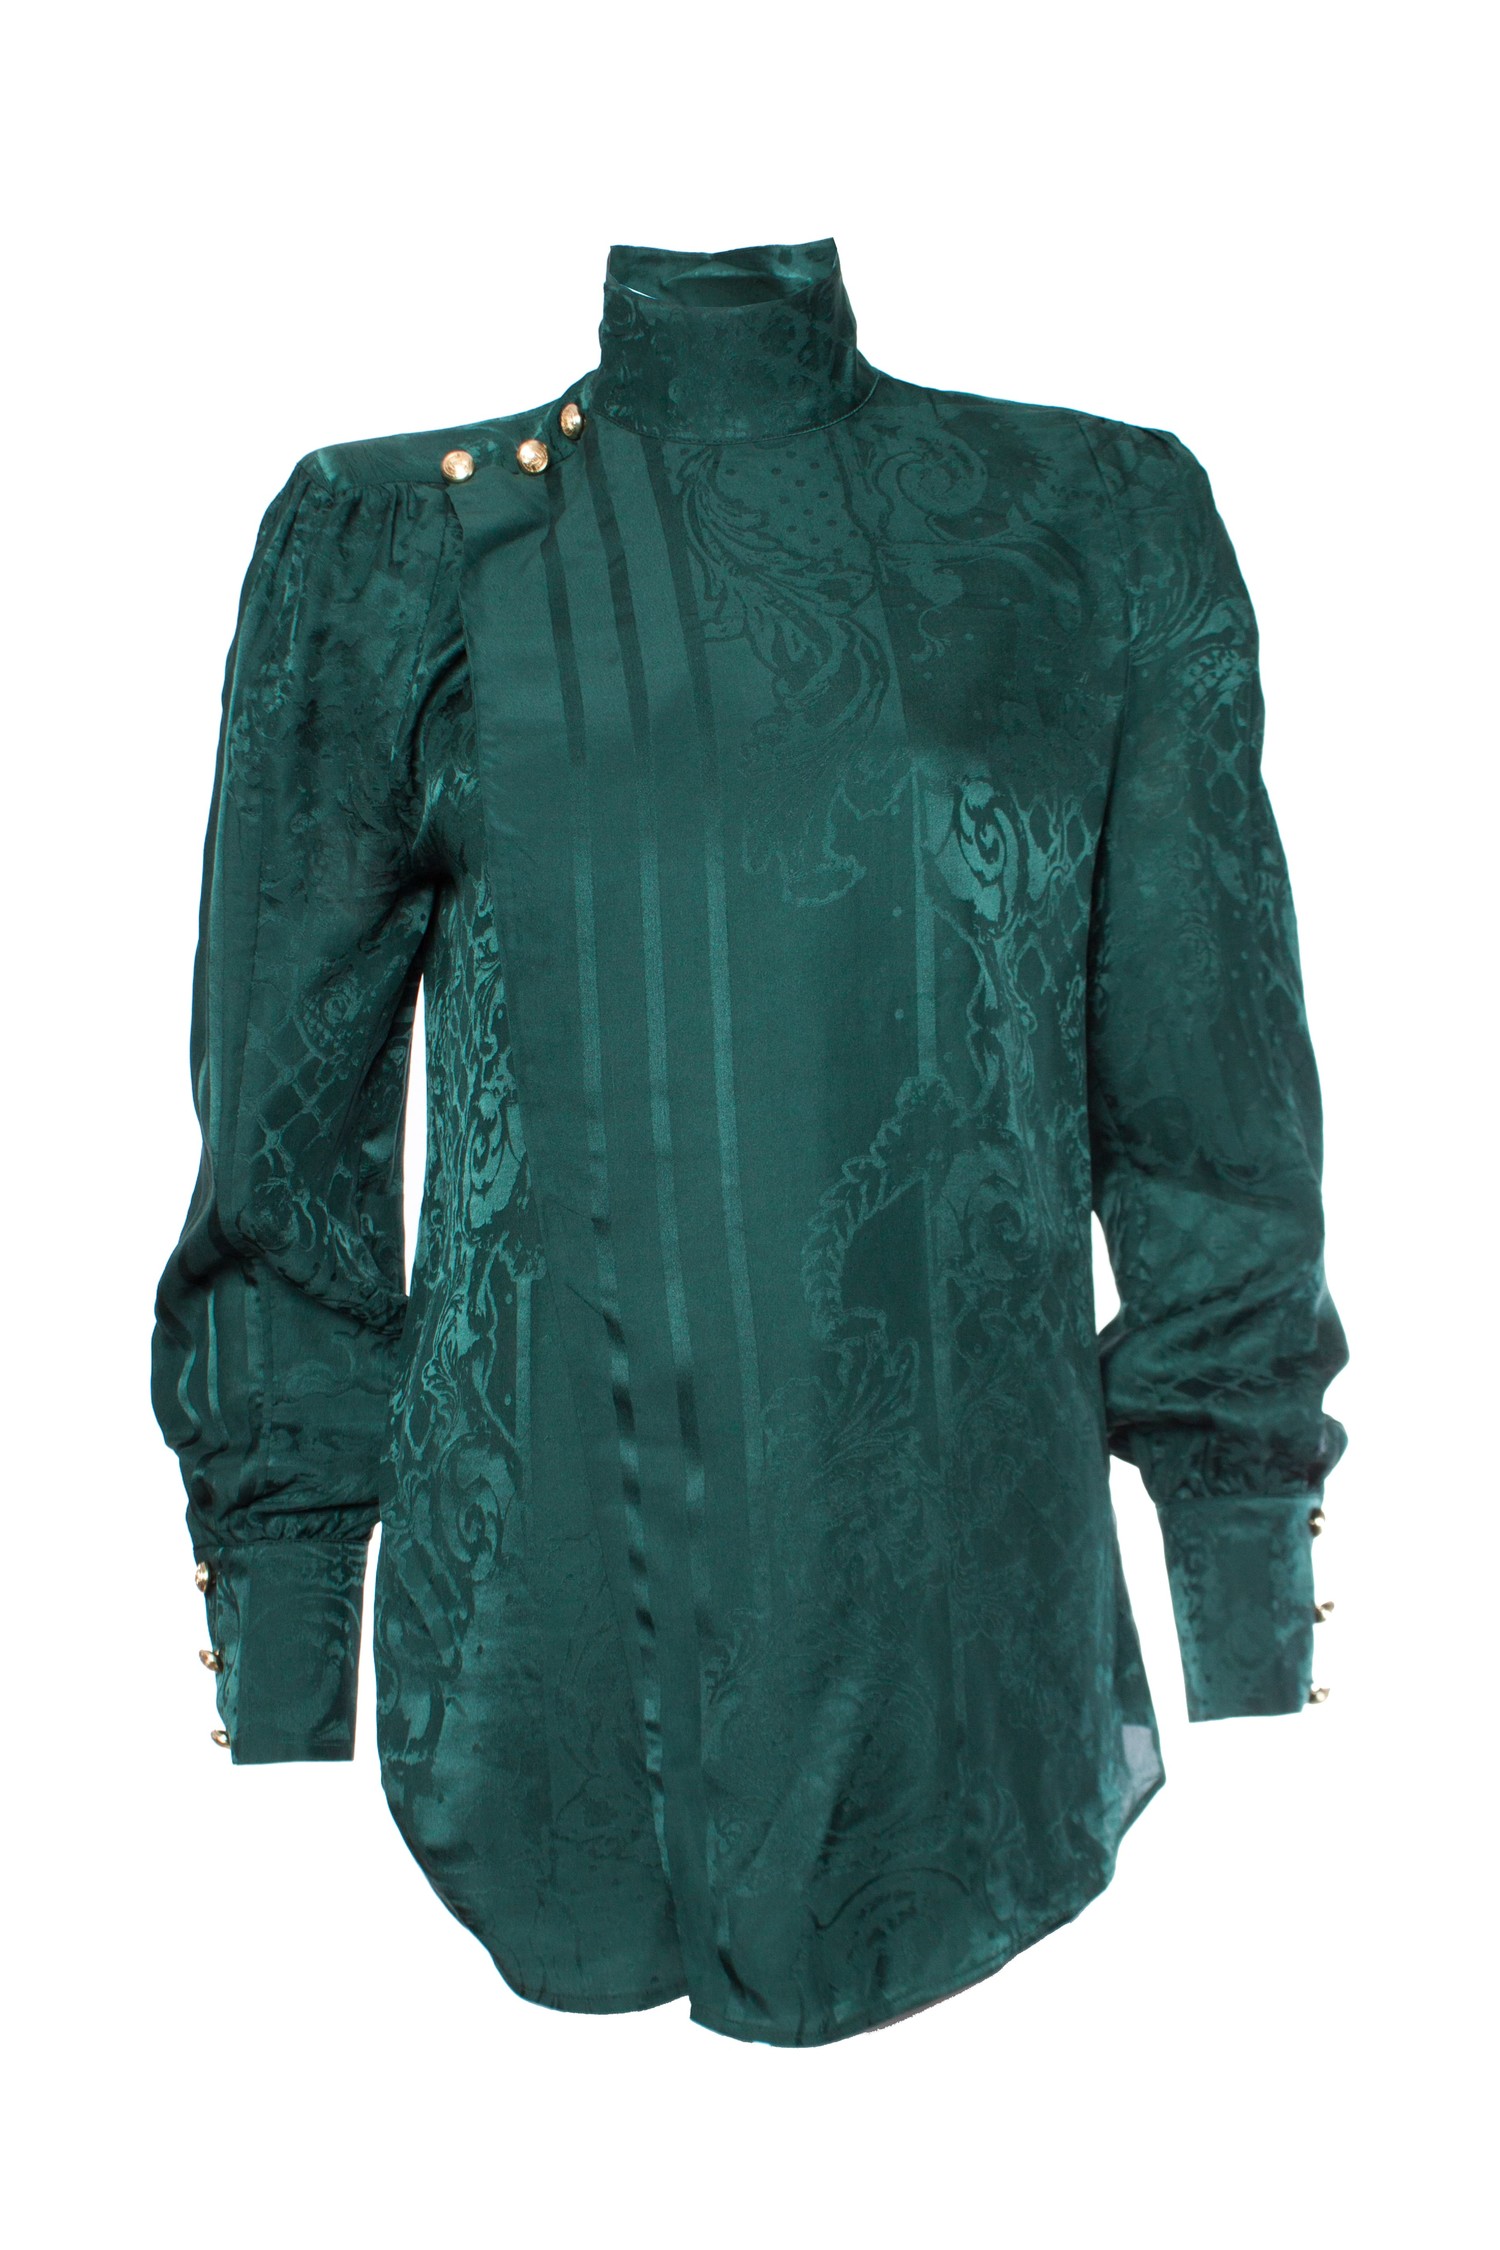 Balmain for H&M, Silk blouse in green - Unique Designer Pieces